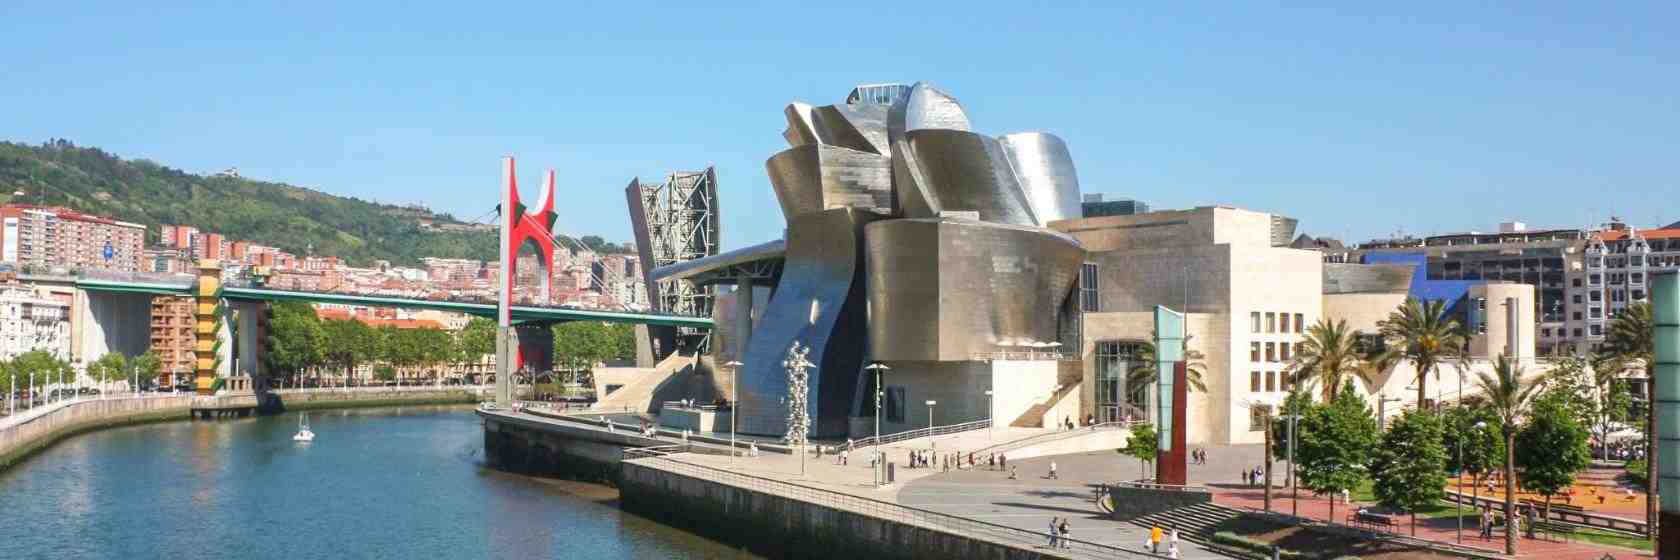 Comment visiter Guggenheim Bilbao ?